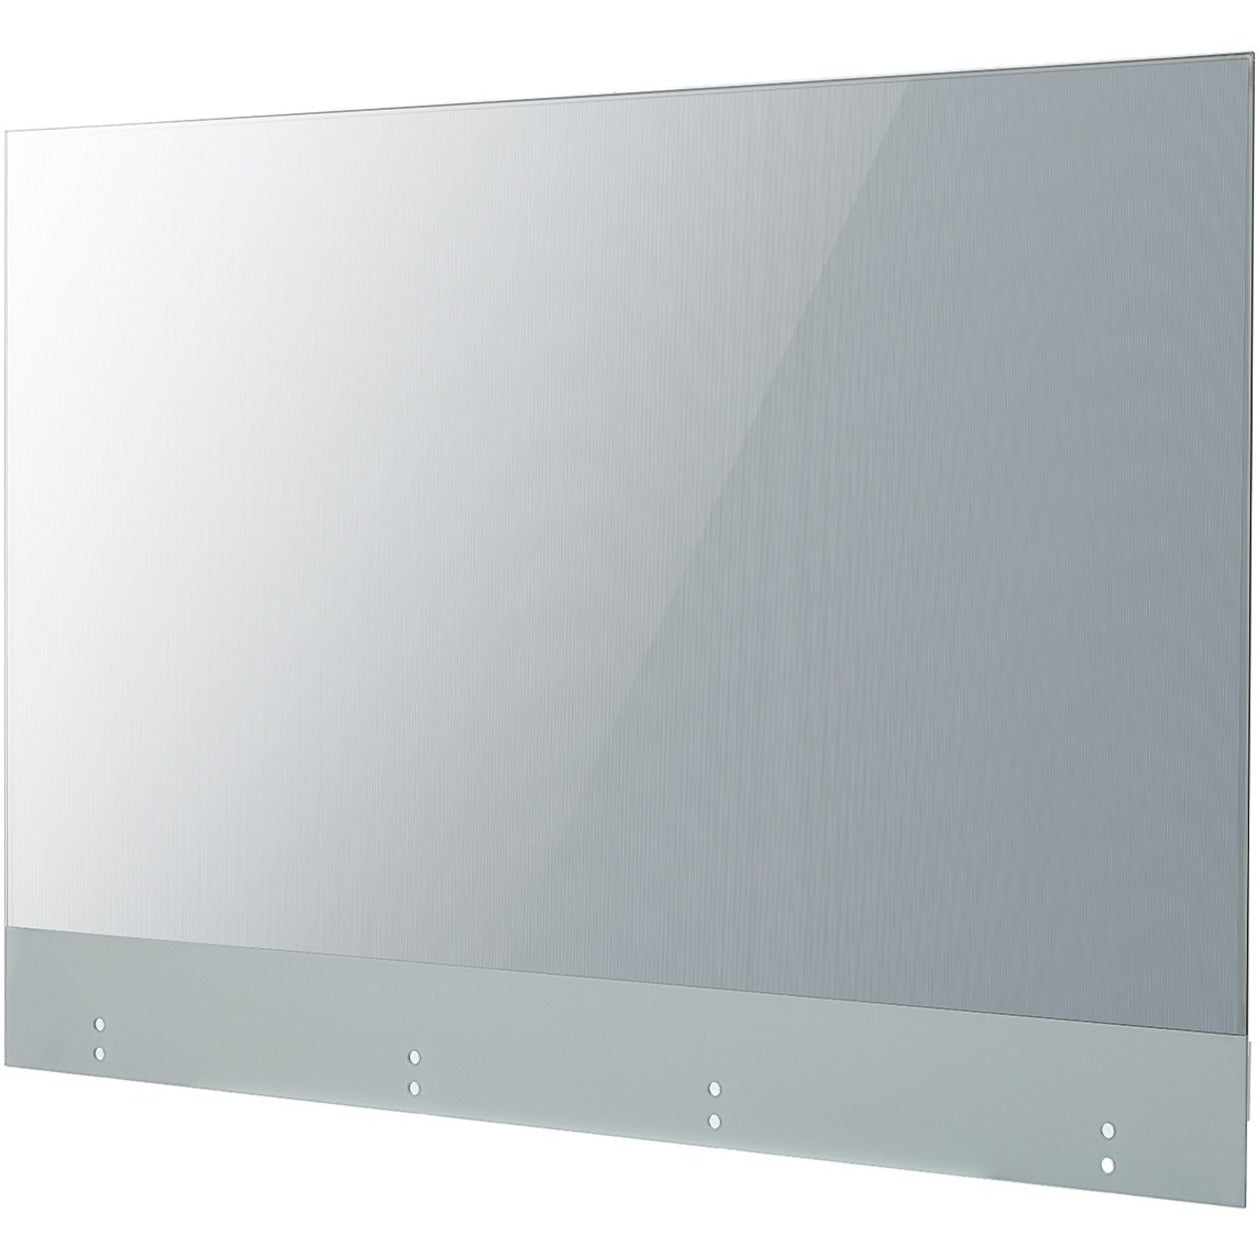 LG Transparent OLED Signage (55EW5G-V)